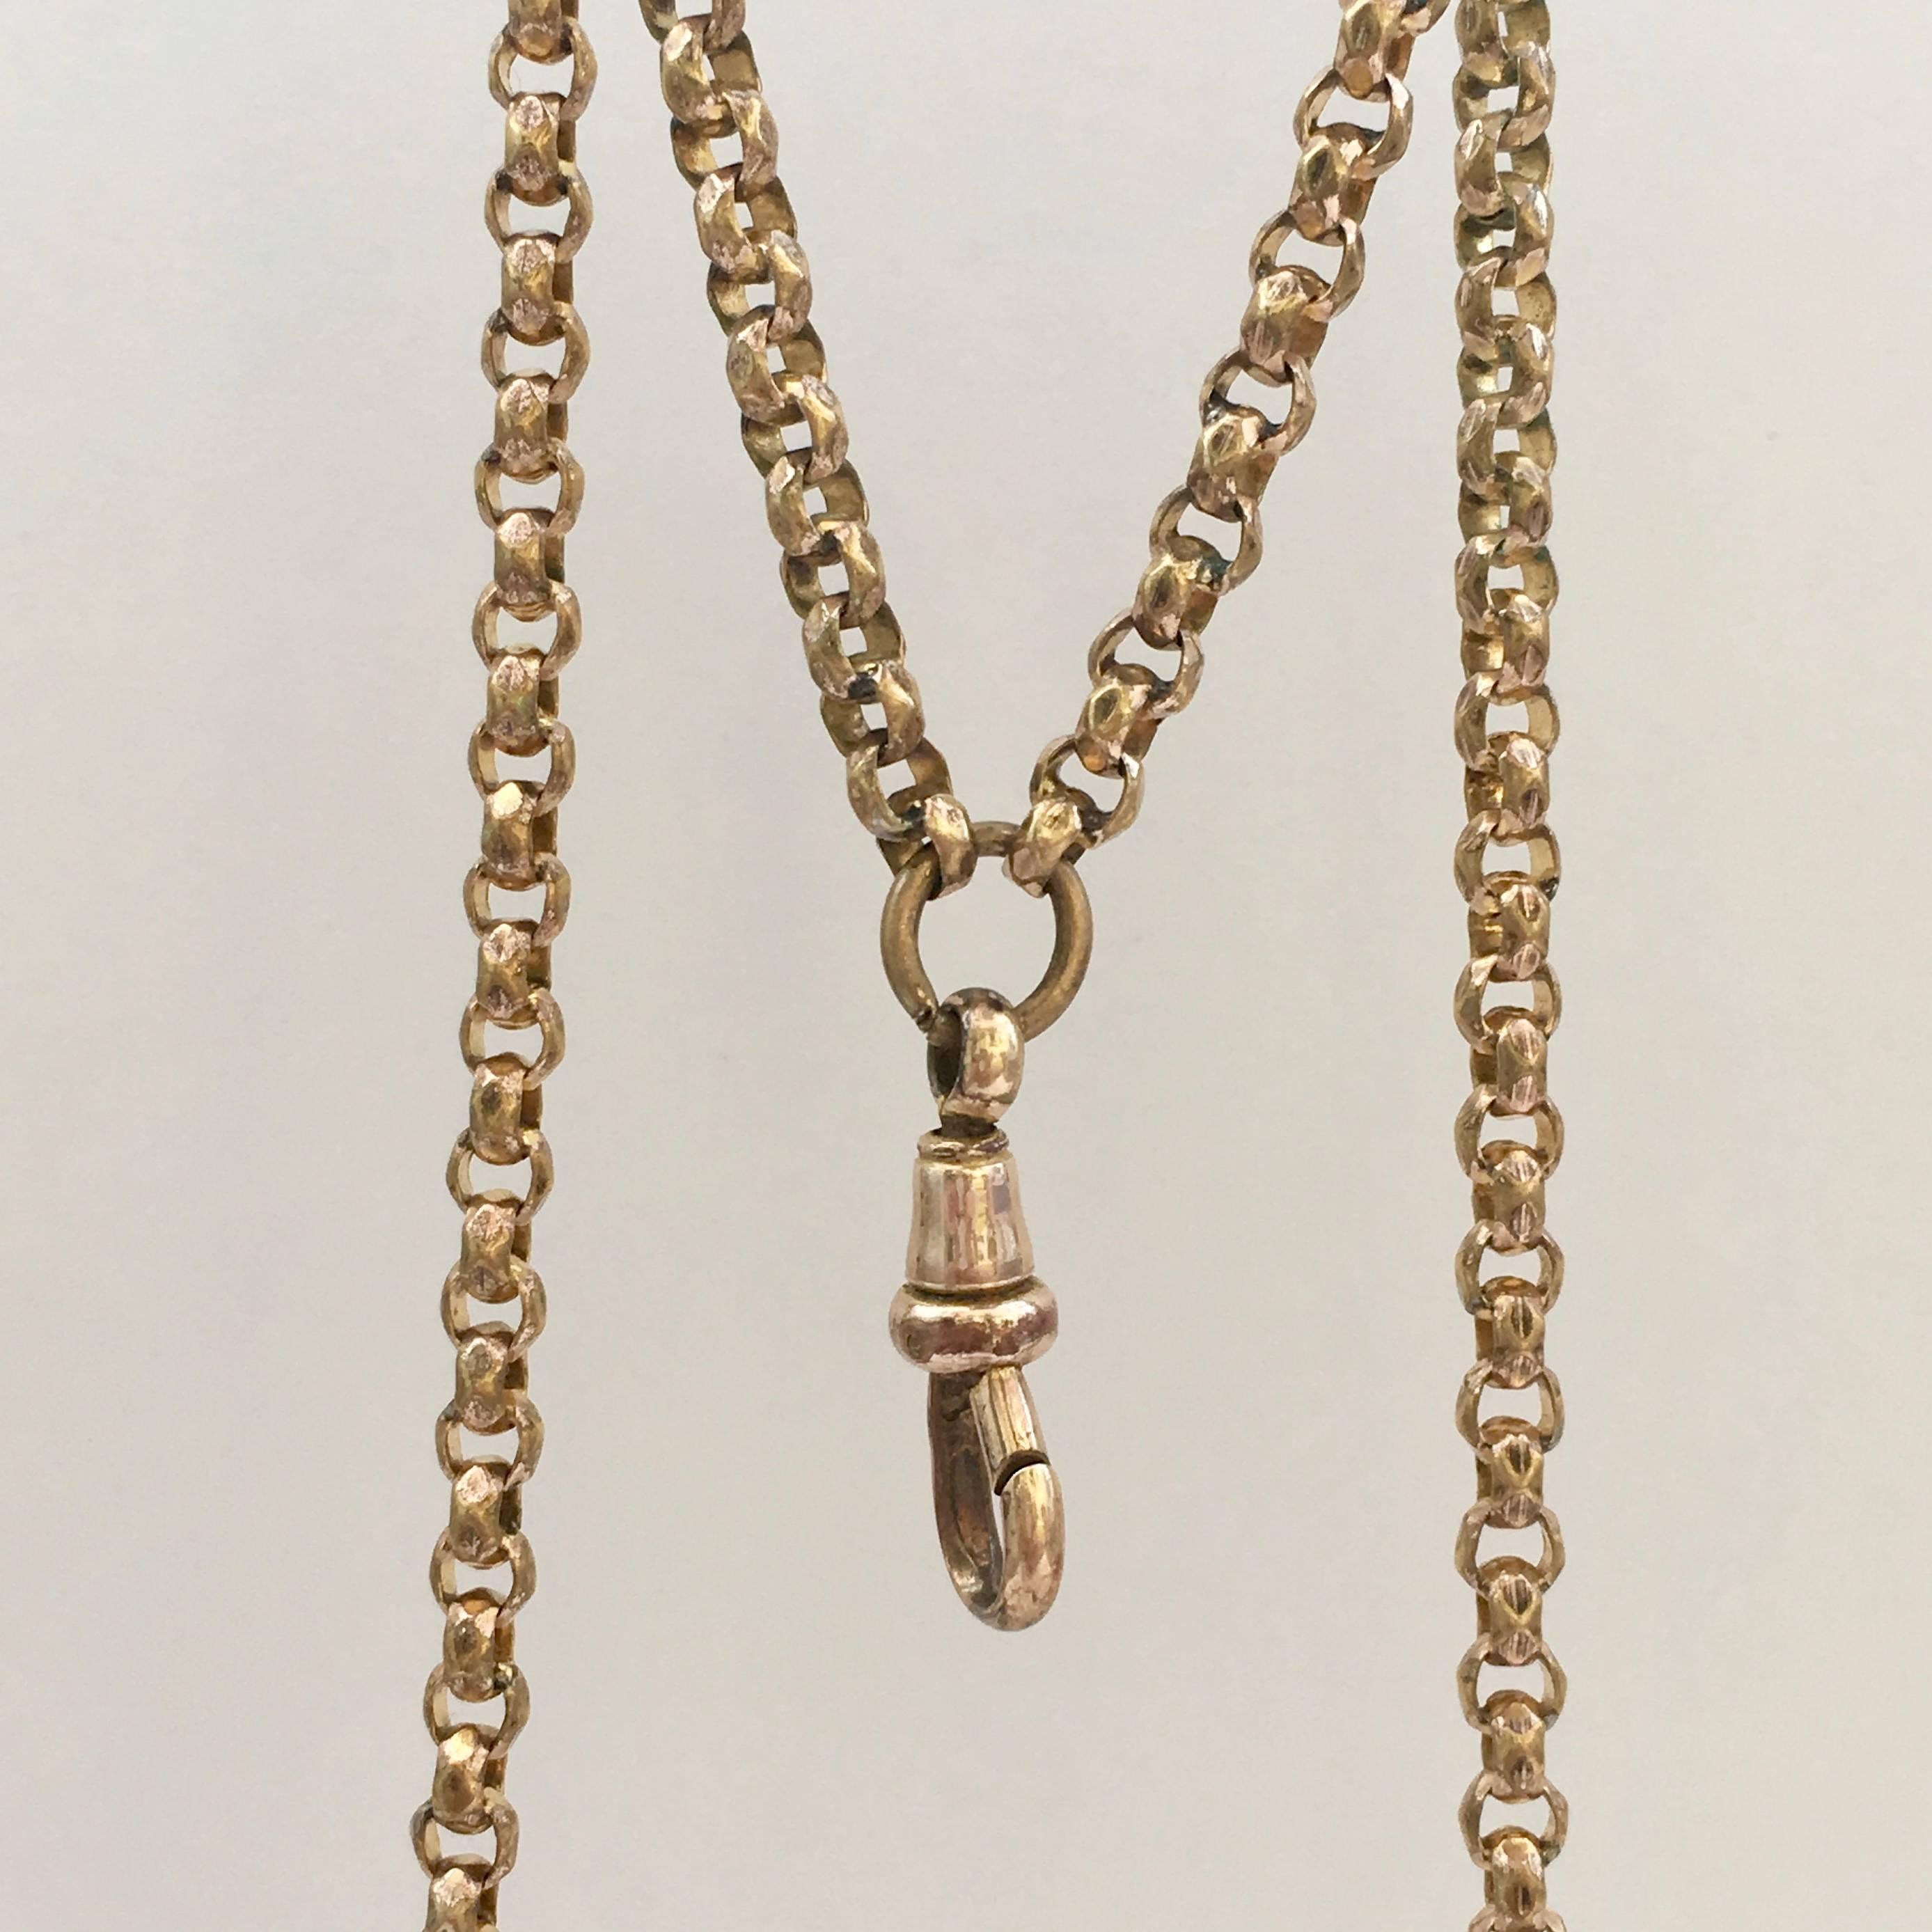 Antique Chains Gilt Brass Necklace Vintage Jewelry Longuard Chain Charm Holder 1